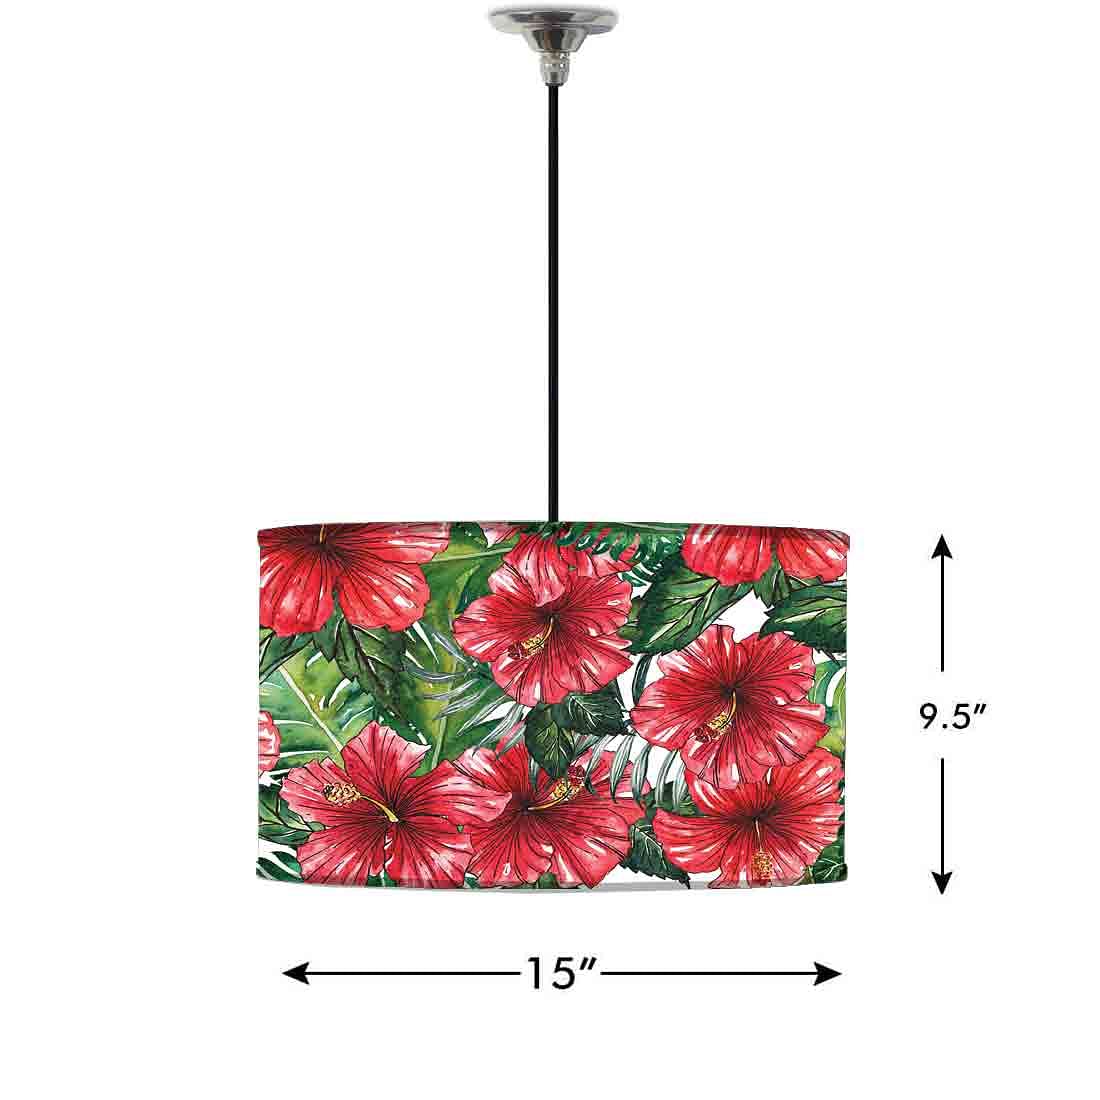 Pendant Lights Lamps for Bedroom - Flower 0028 Nutcase